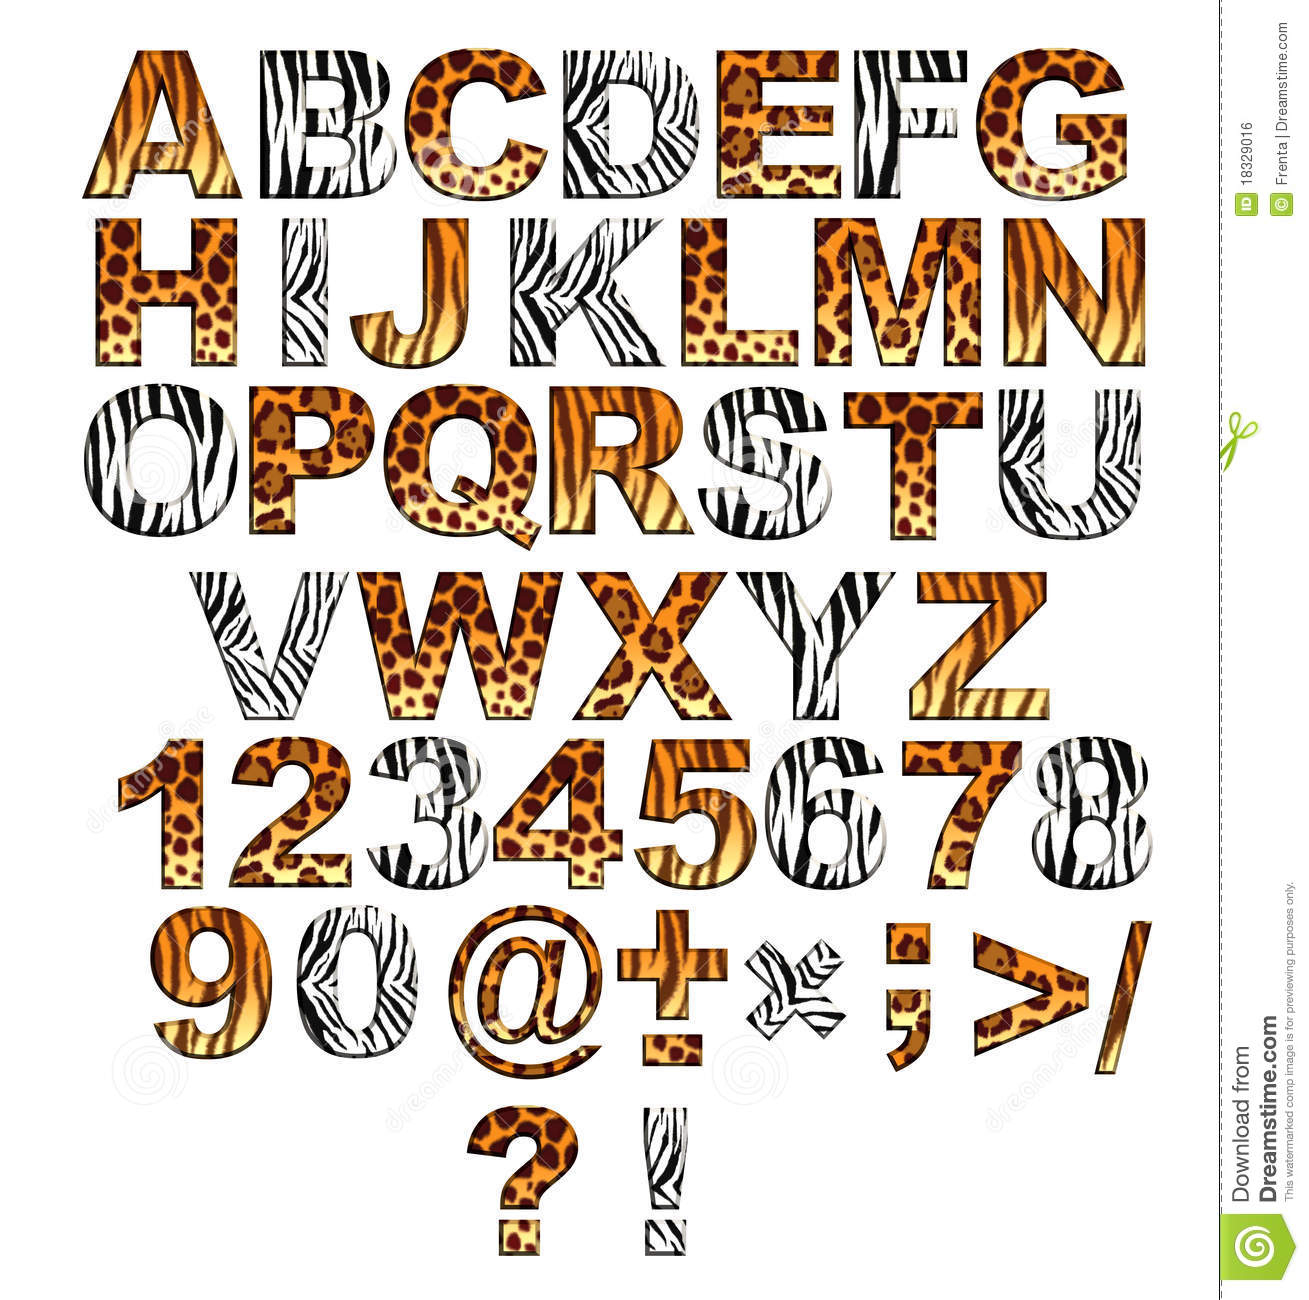 10 Safari Animal Font Images Zoo Animal Alphabet Letters 